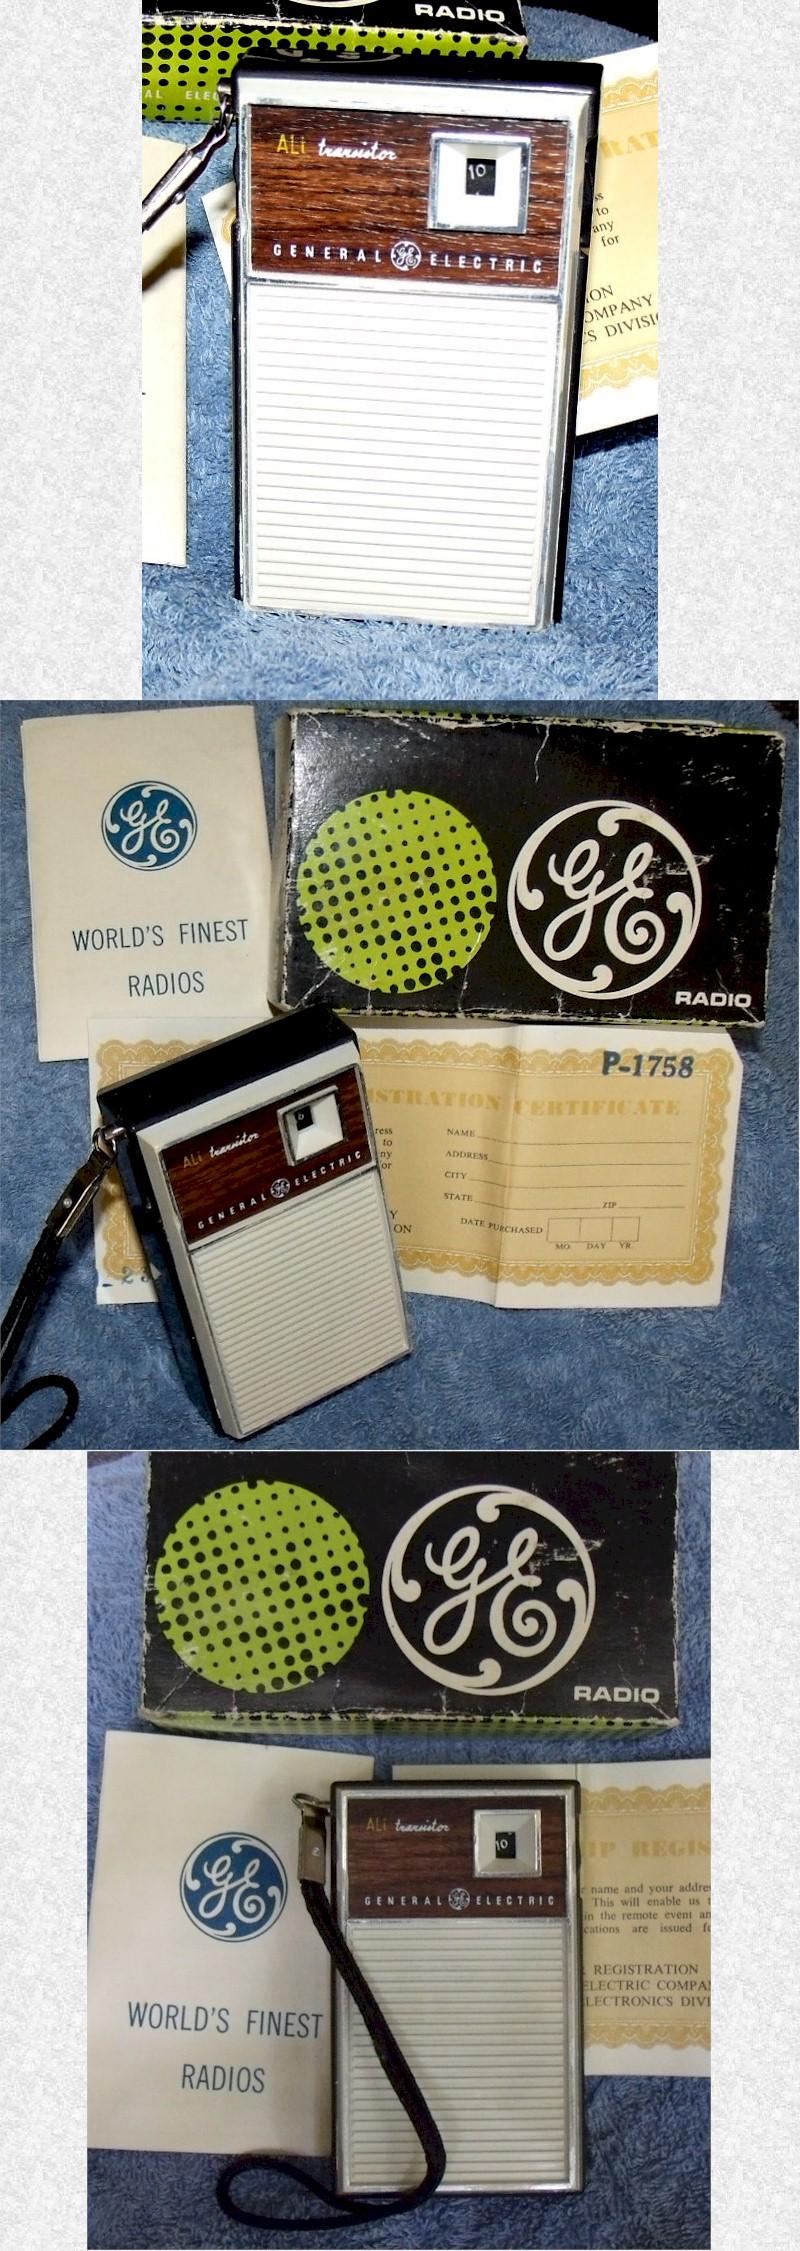 General Electric P1758 Pocket Transistor (1969)